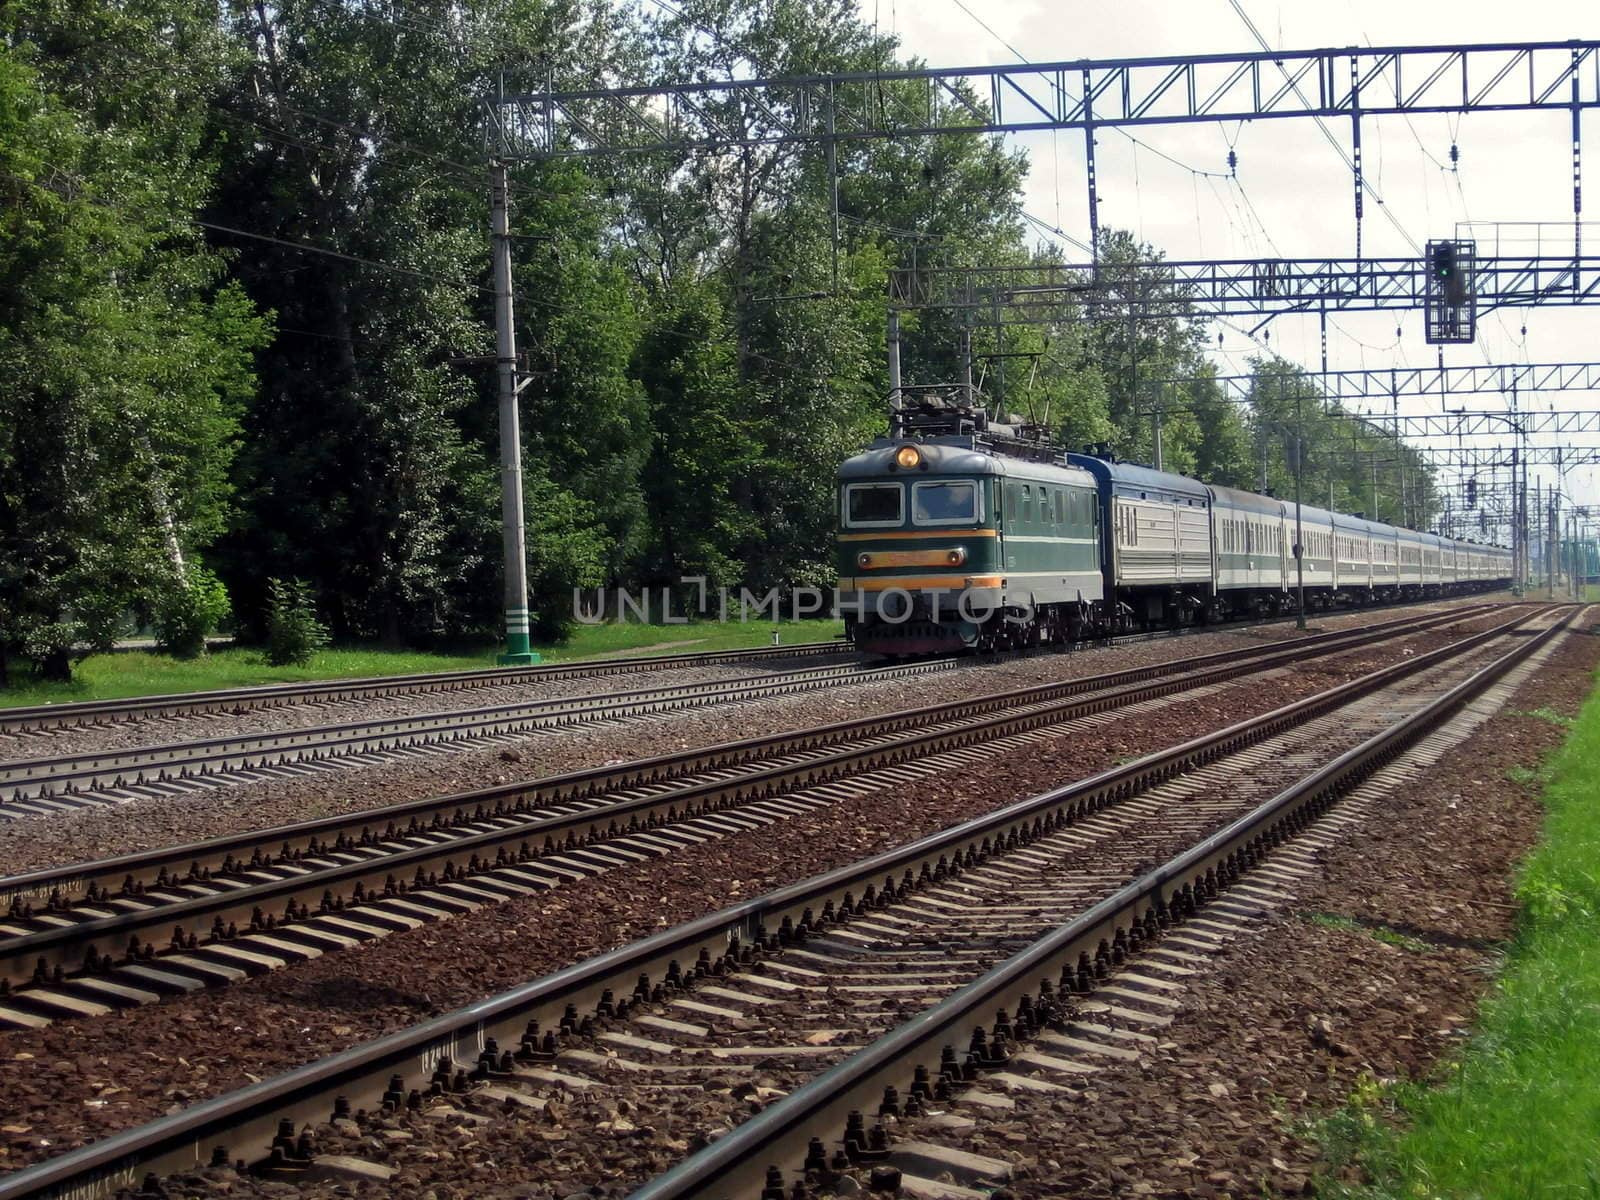 Long green train moves through wood on rails